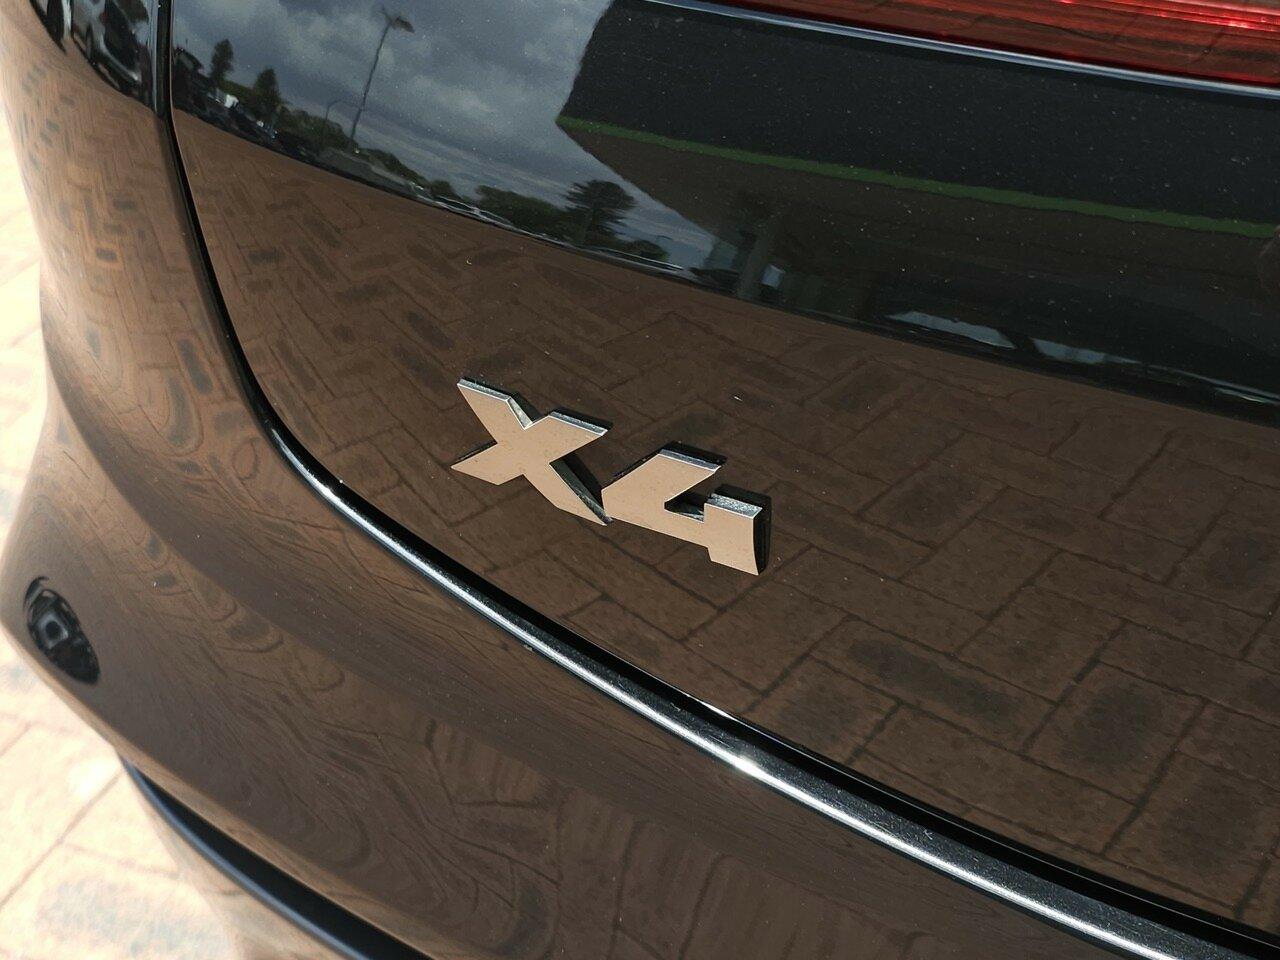 BMW X4 image 3